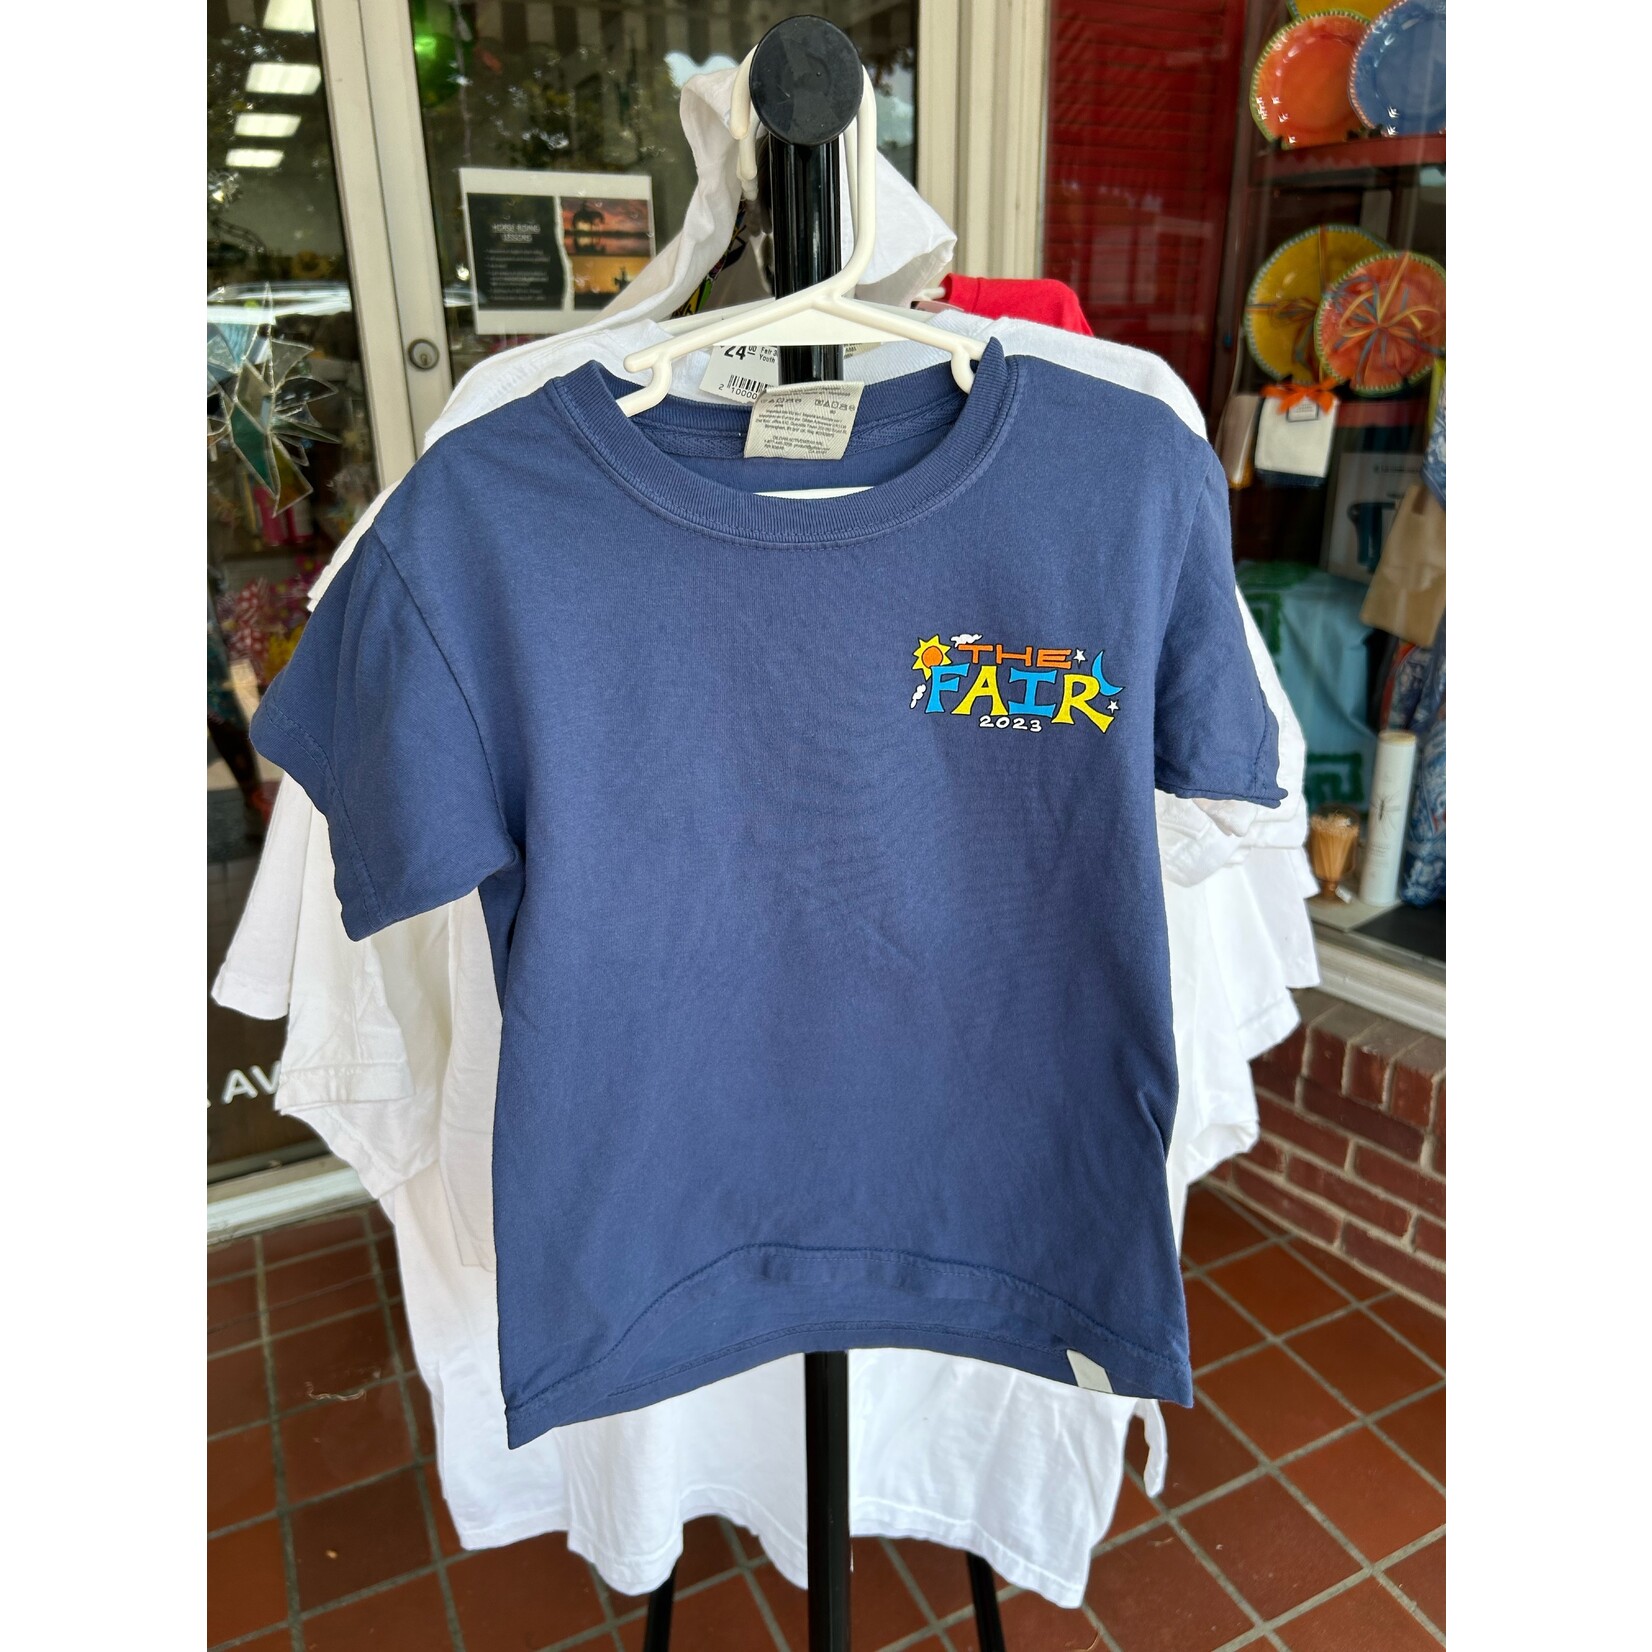 Kademi Fair 2023 Youth T-Shirt